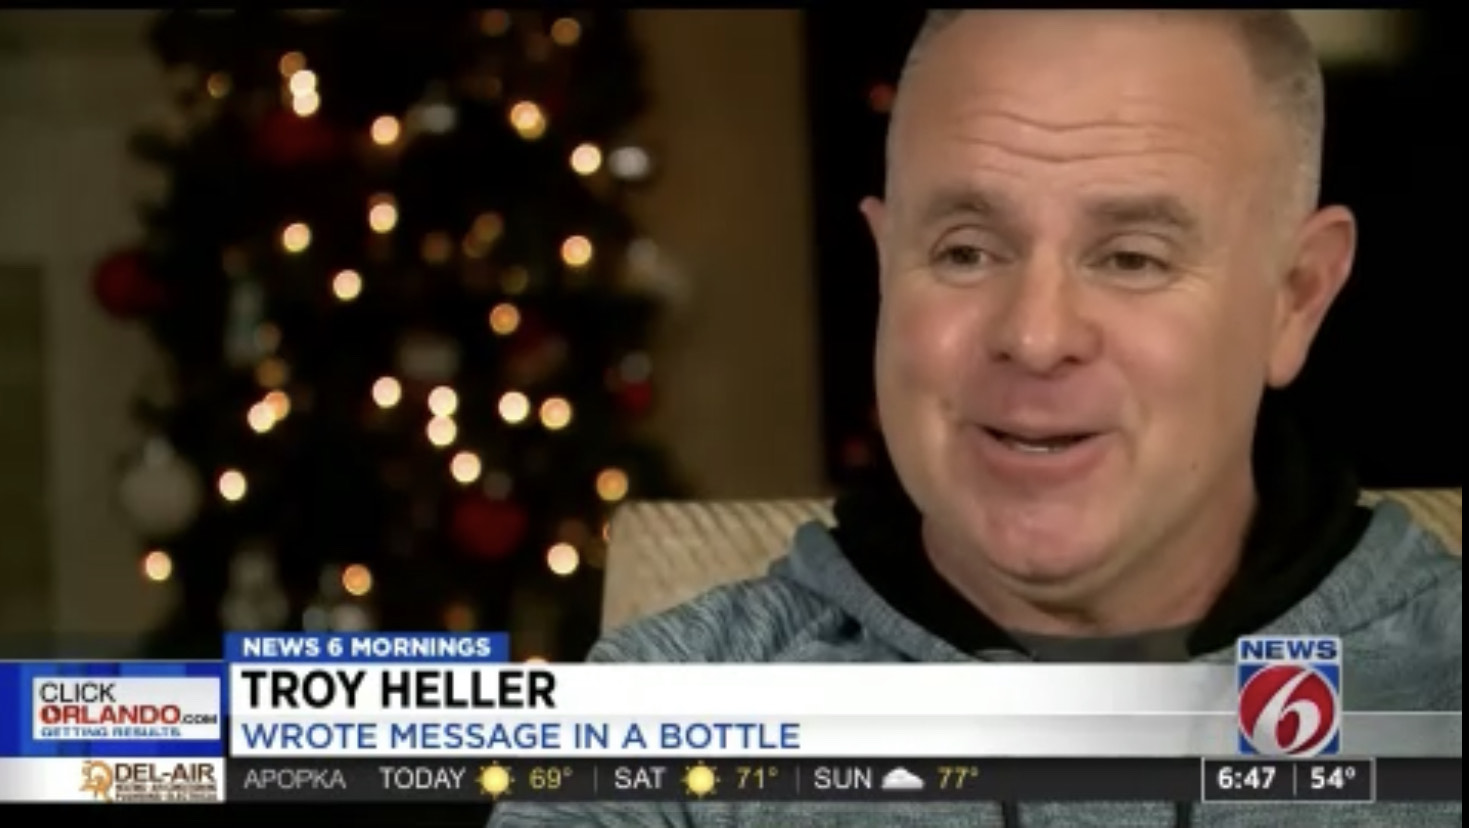 Troy Heller: Wrote Message In A Bottle